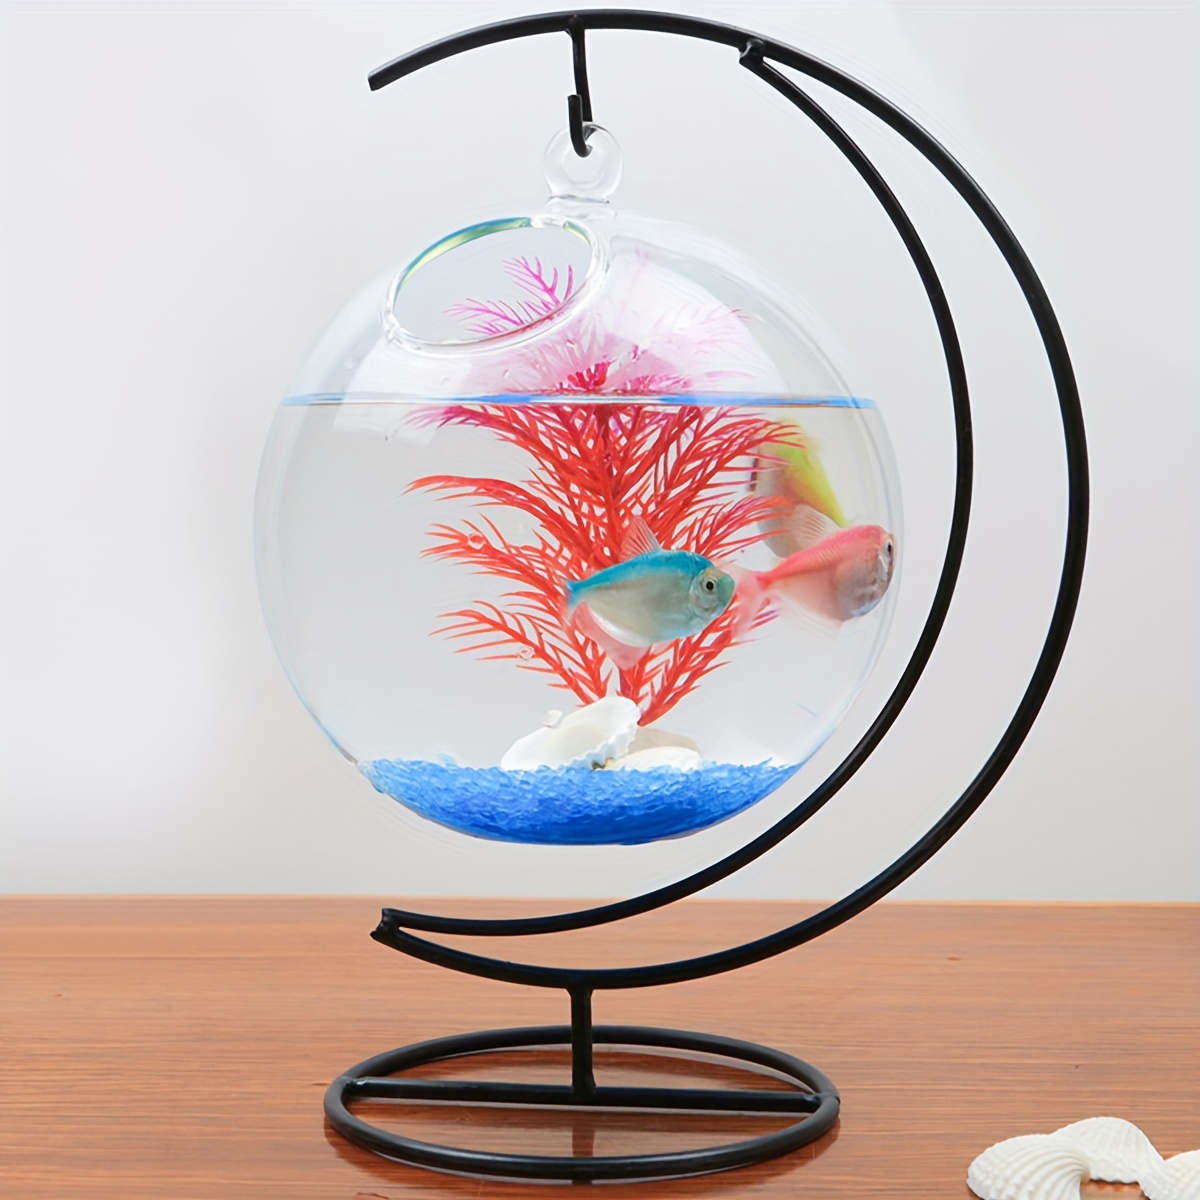 Desk Glass Hanging Fish Bowl Tank, Desk Hanging Fish Tank Bowl with Stand  Table Transparent Glass Fish Vase Aquarium Bowl for Home Garden Betta Fish